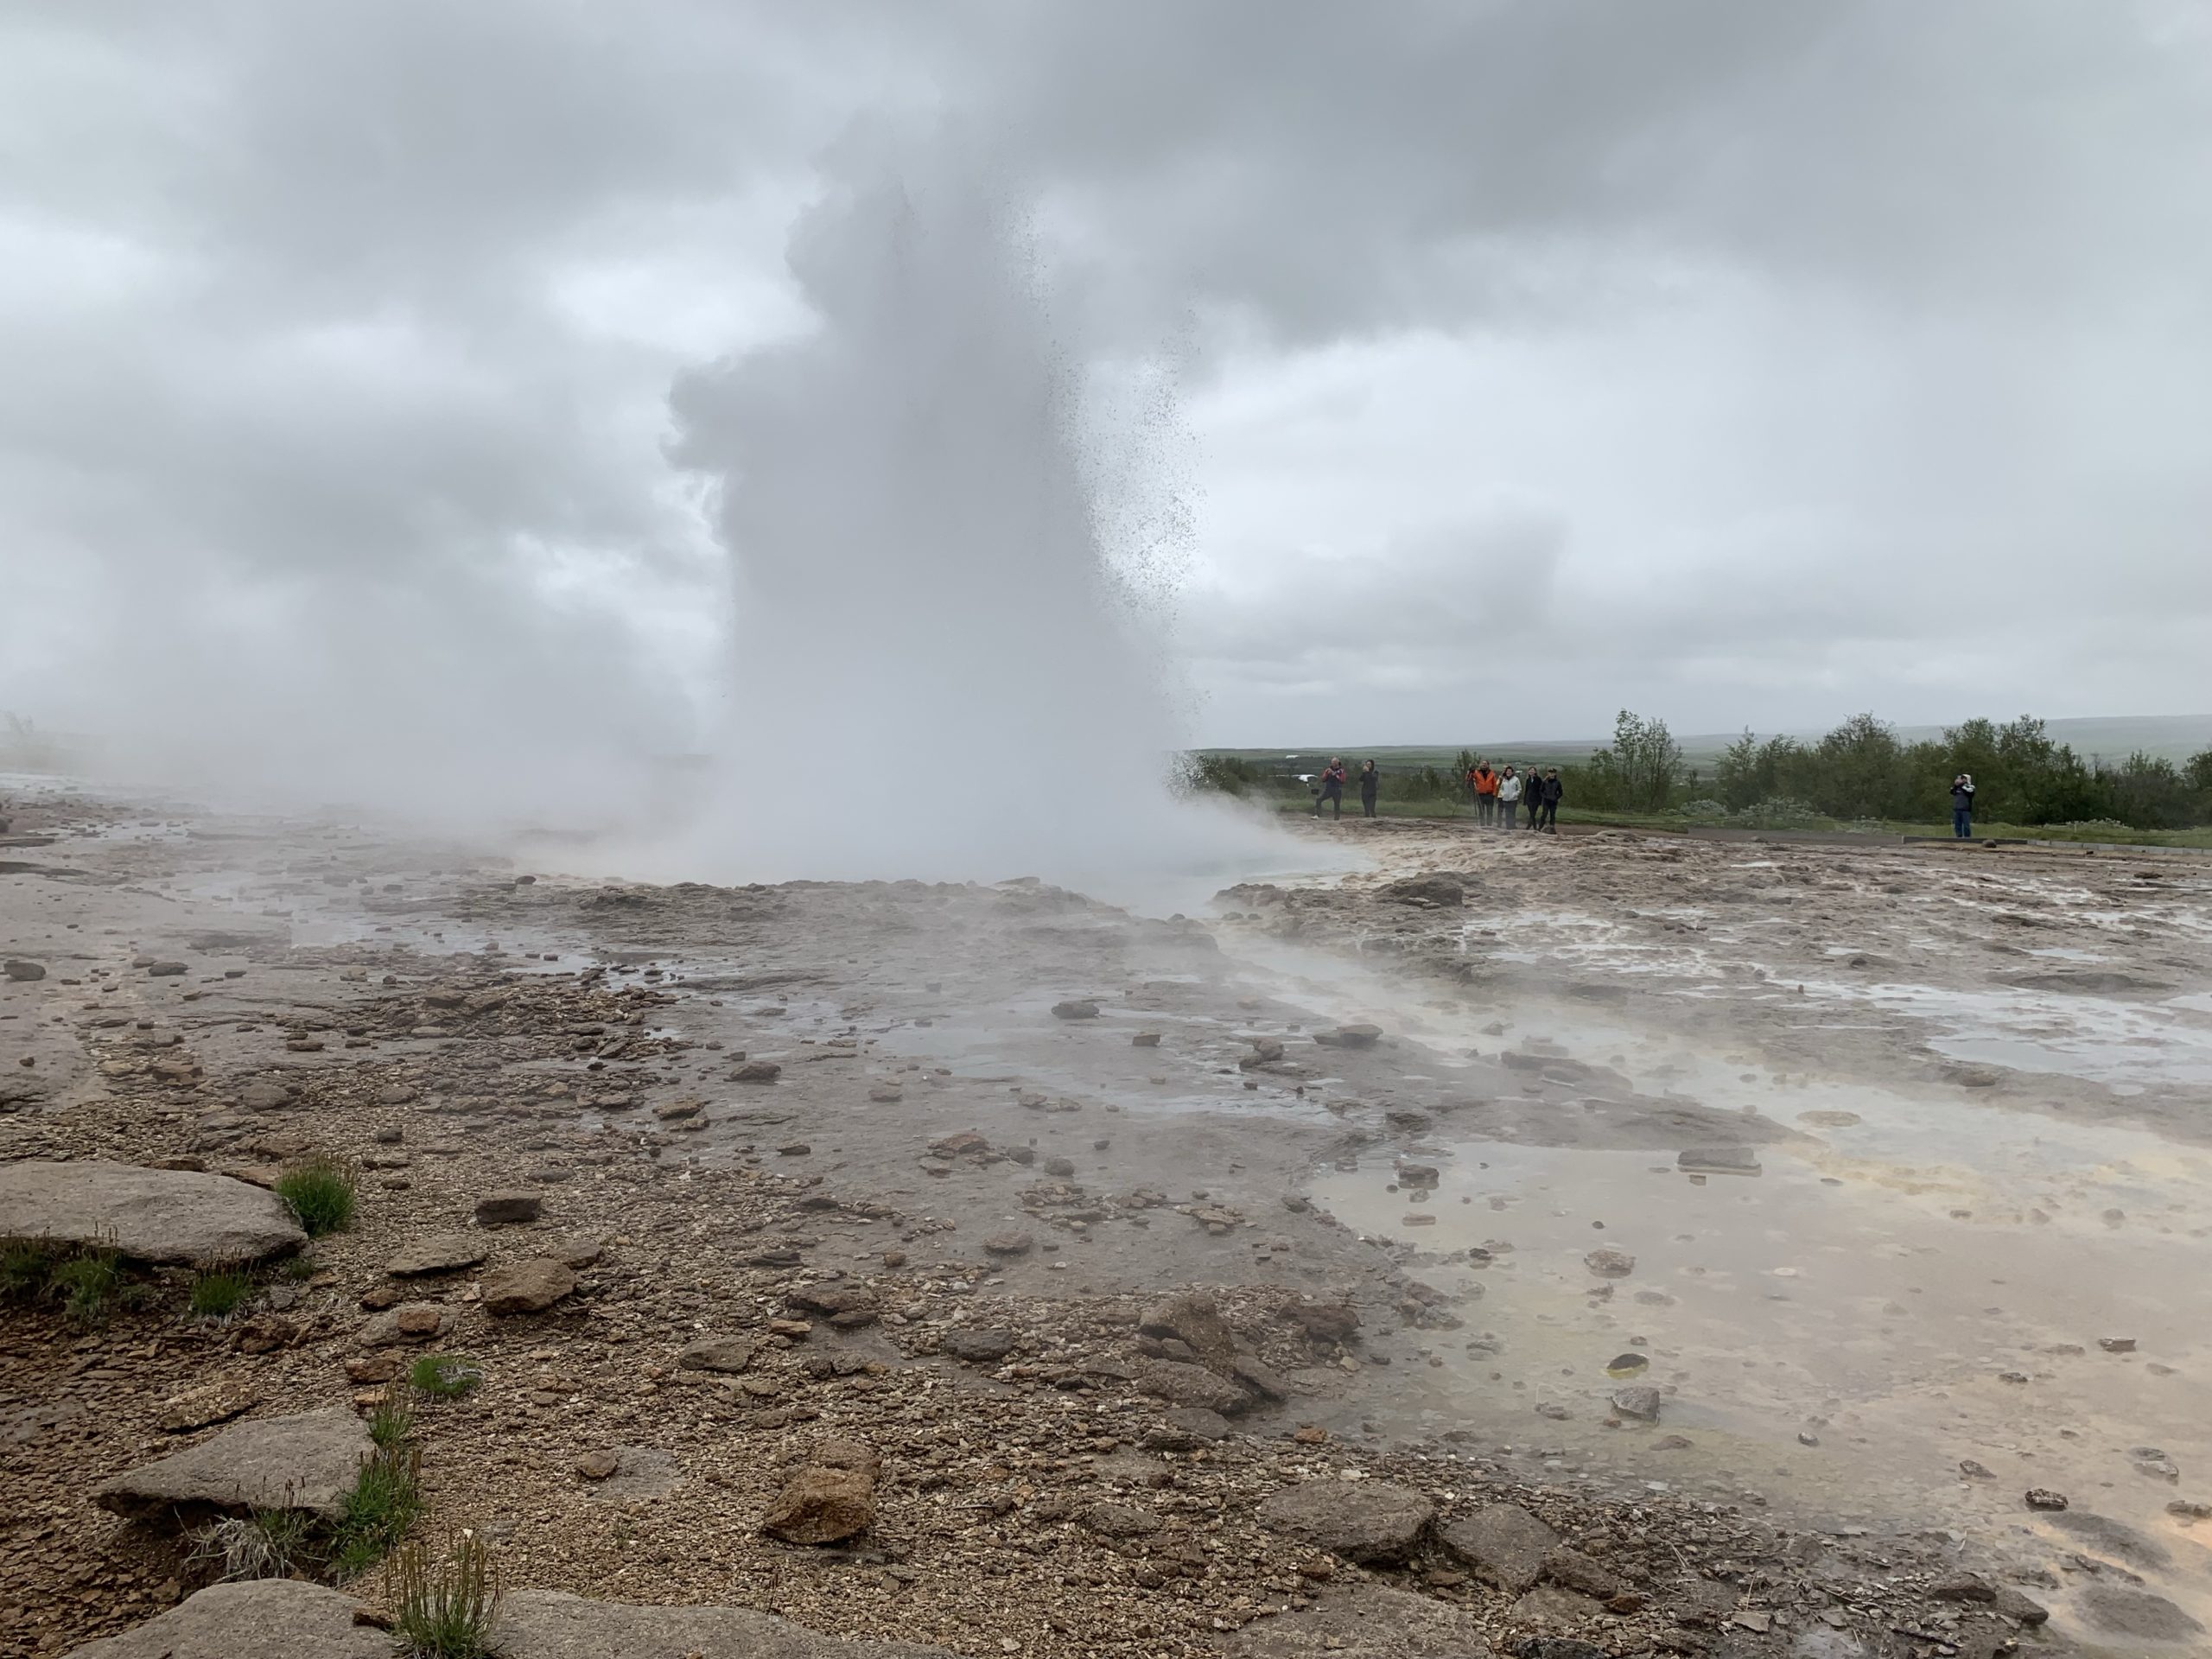 a geyser erupting in a rocky area